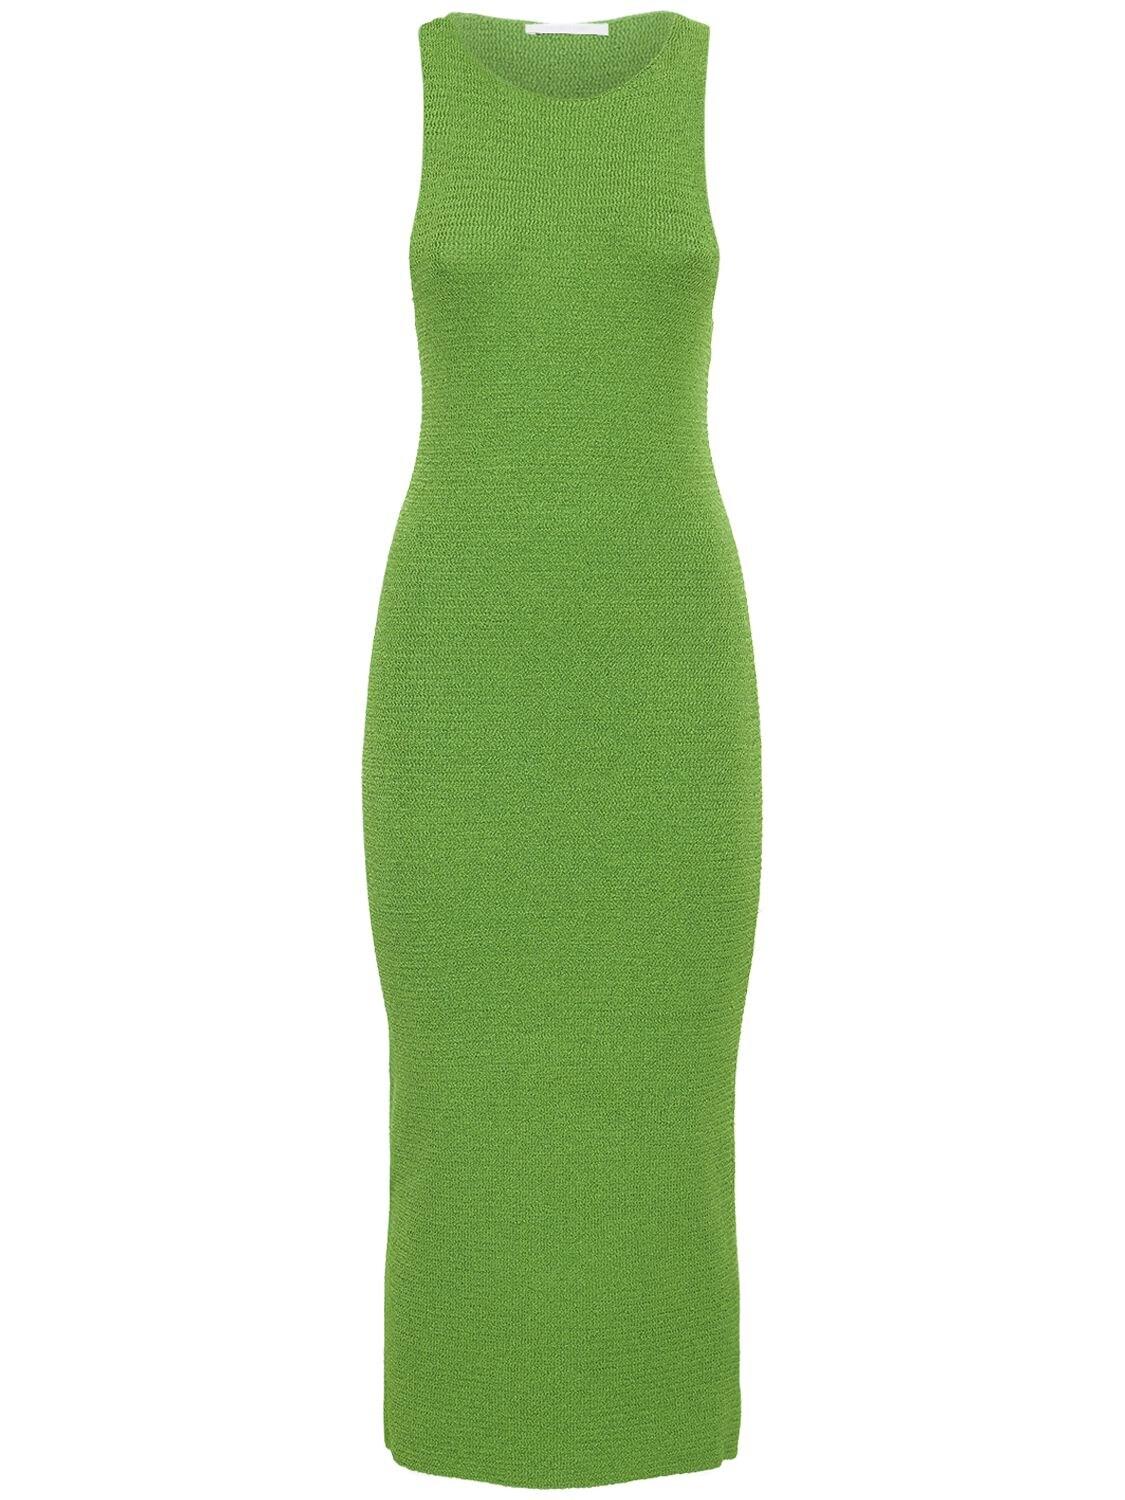 Helmut Lang Ribbon Knitted Midi Dress in Green | Lyst UK